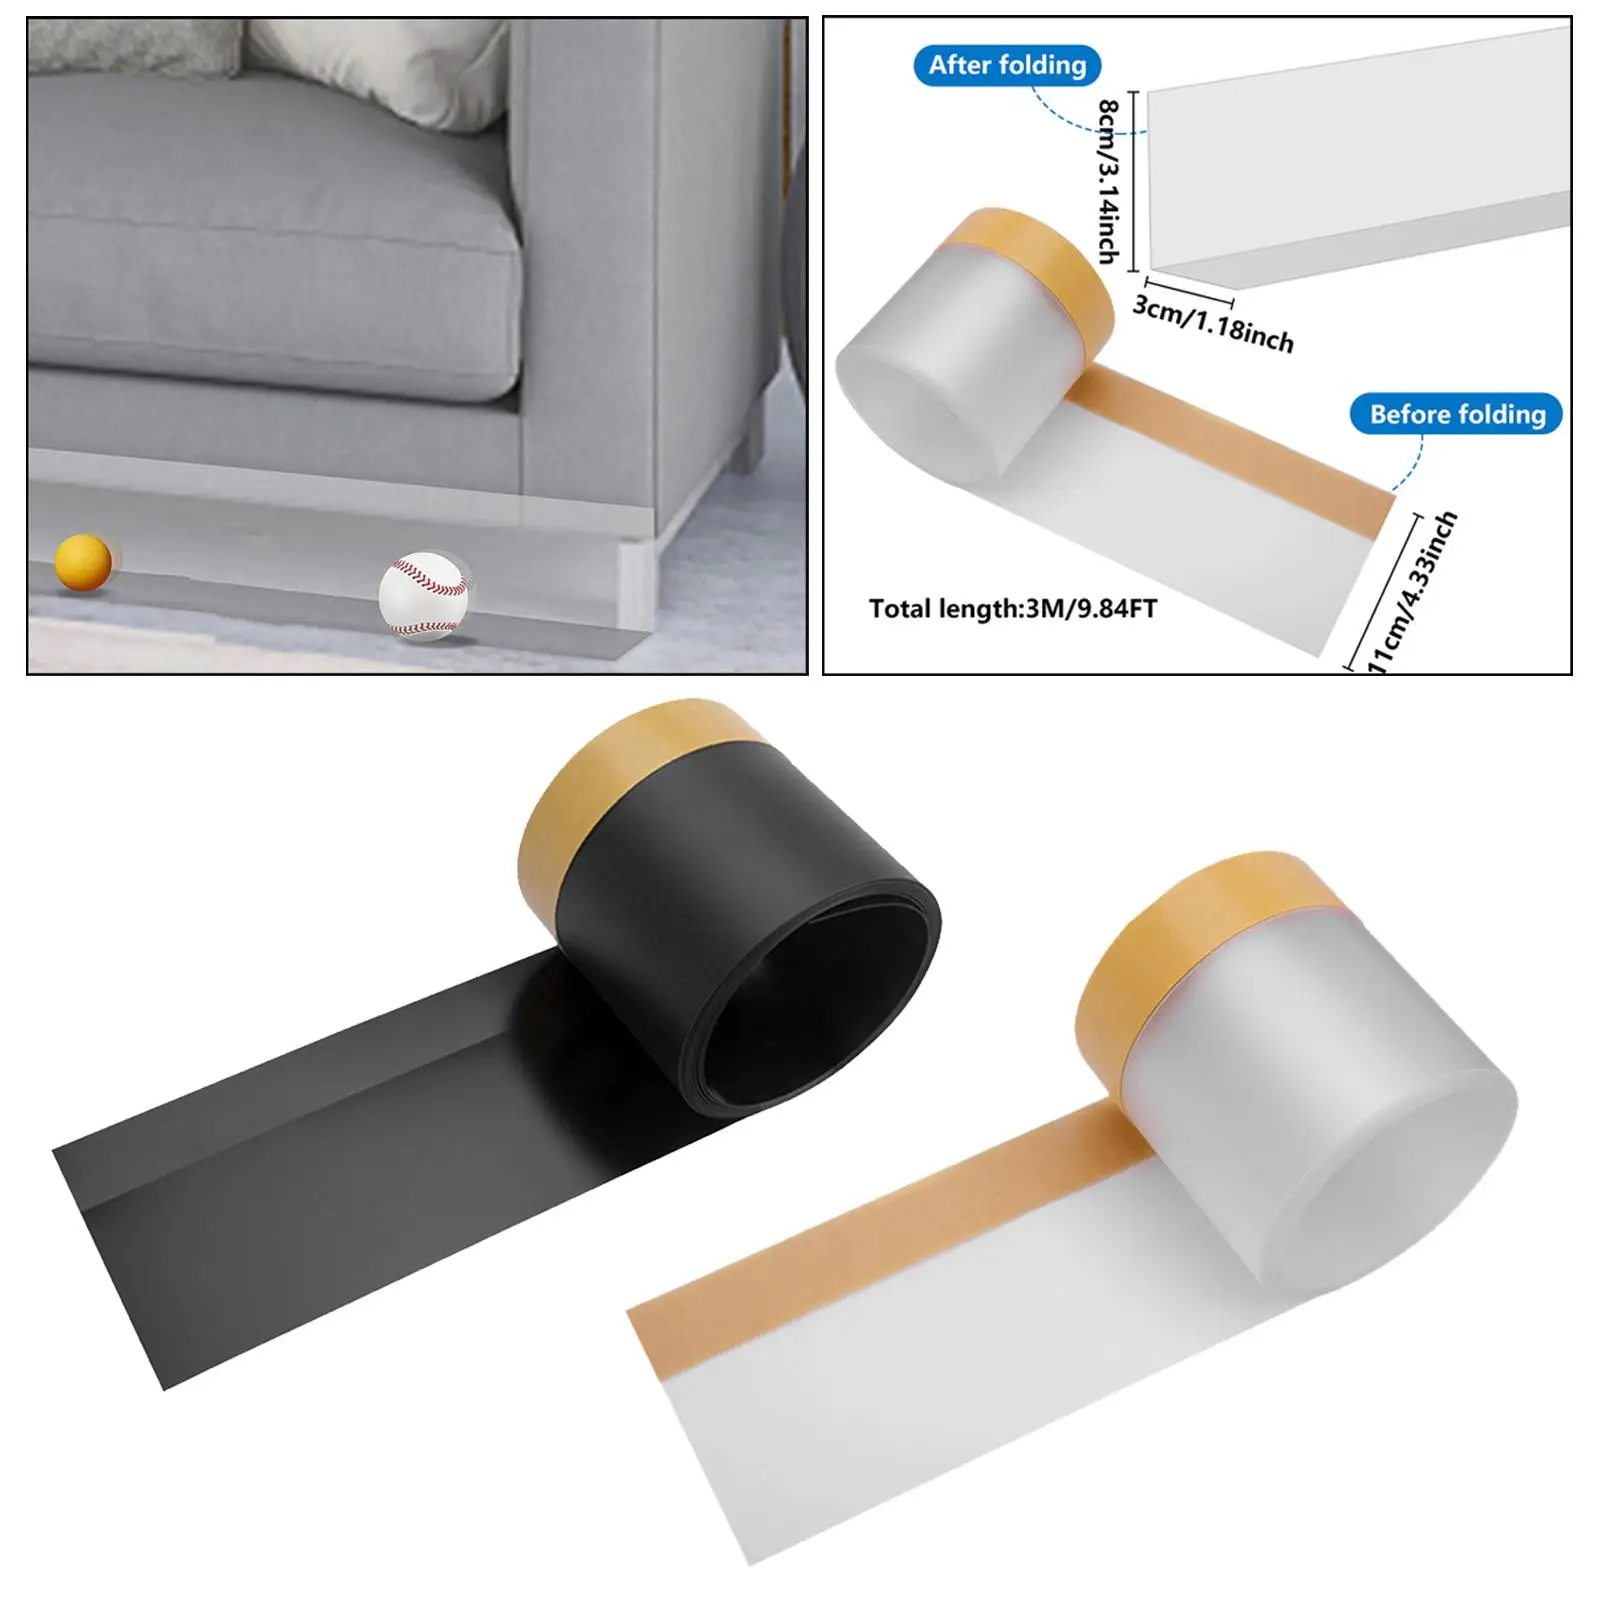 Household Under Sofa Toy Separator Gap Bumper Adjustable Bumper Guard Bed Separator for Room Sliding Sofas Bedside Couch